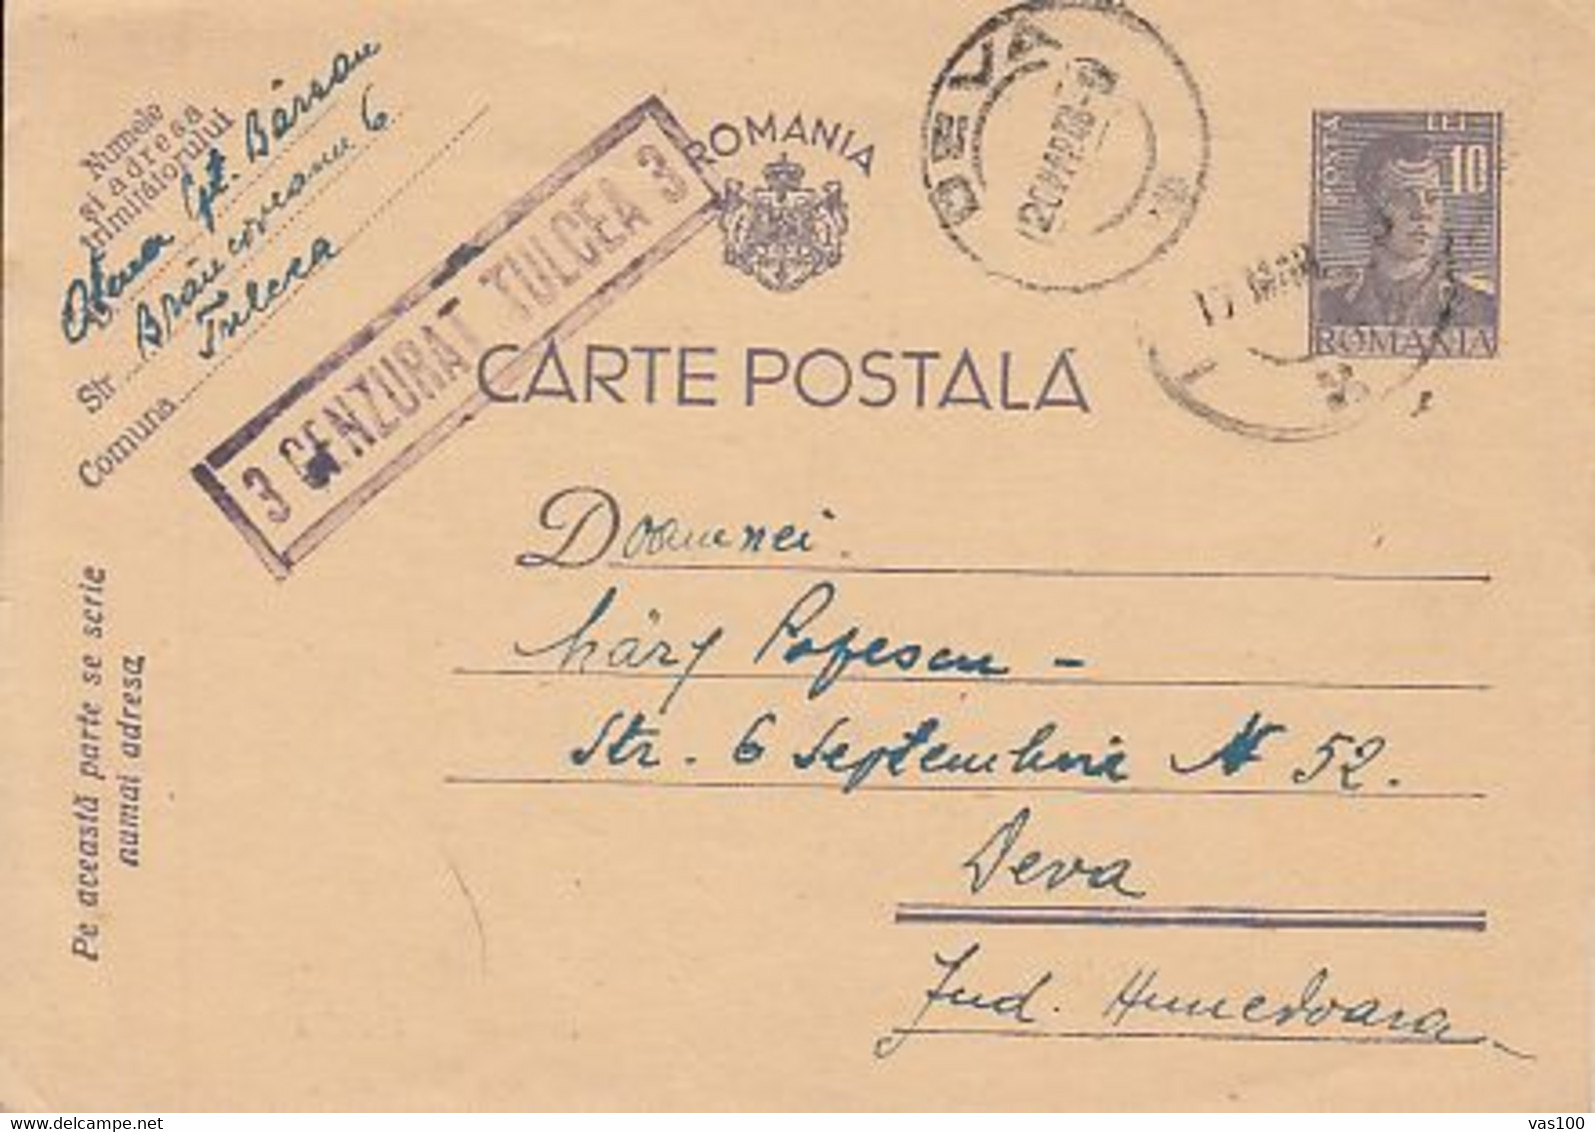 WW2 LETTERS, CENSORED TULCEA NR 3, KING MICHAEL PC STATIONERY, ENTIER POSTAL, 1944, ROMANIA - Cartas De La Segunda Guerra Mundial